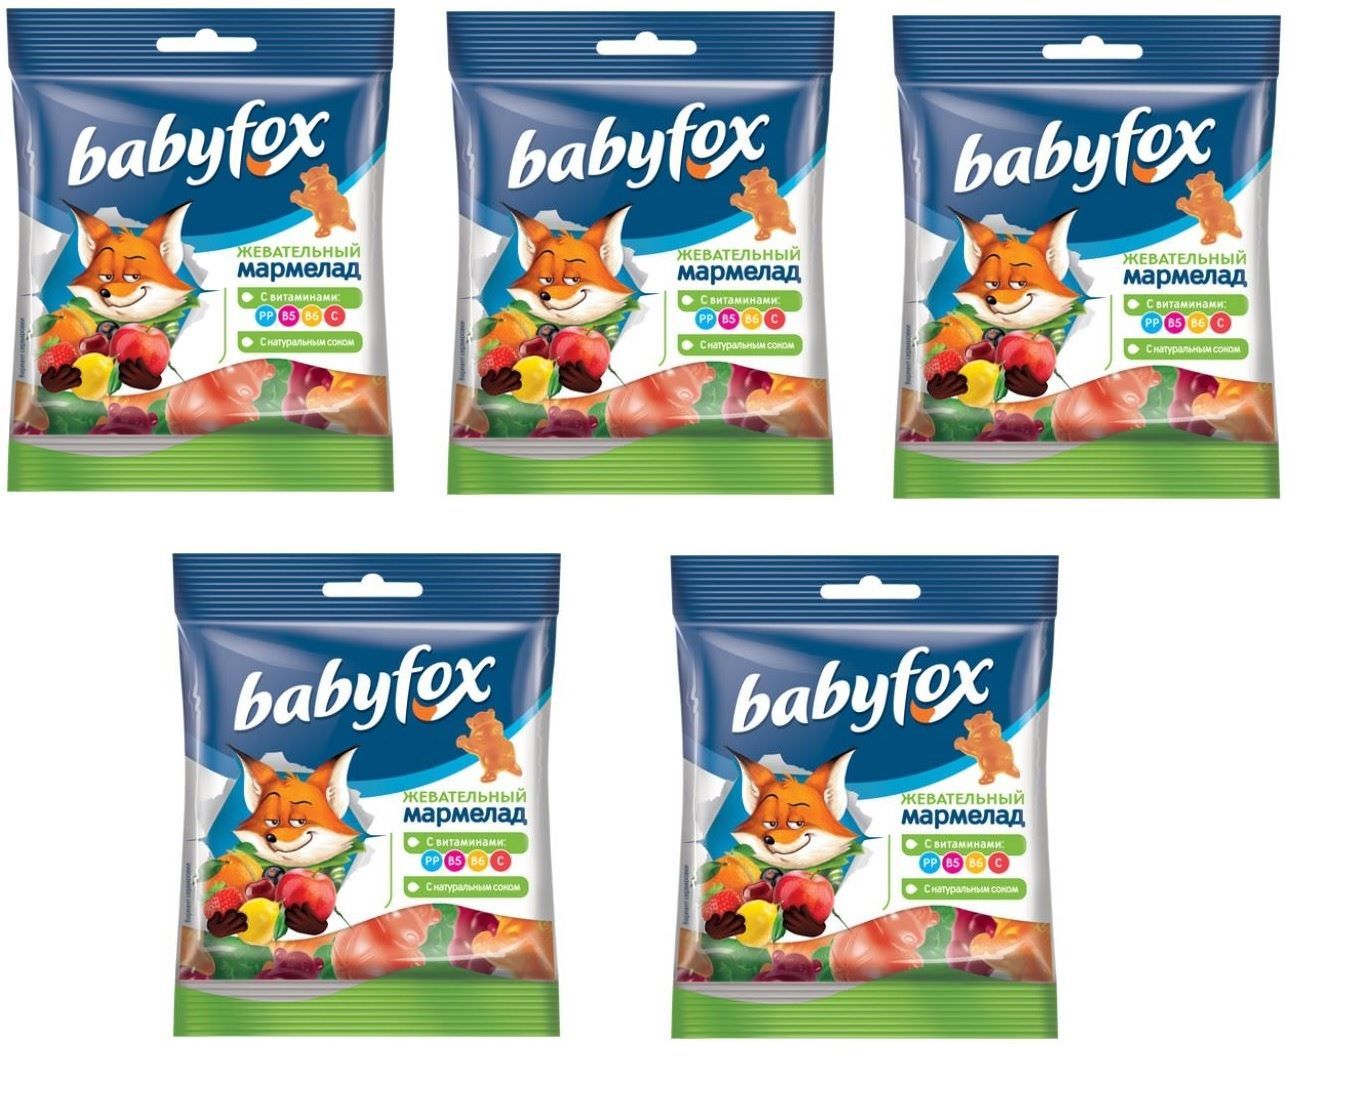 Мармелад Babyfox, 30г. Baby Fox мармелад. Мармеладки с лисой. Мармелад с витаминами. Marmalade fox